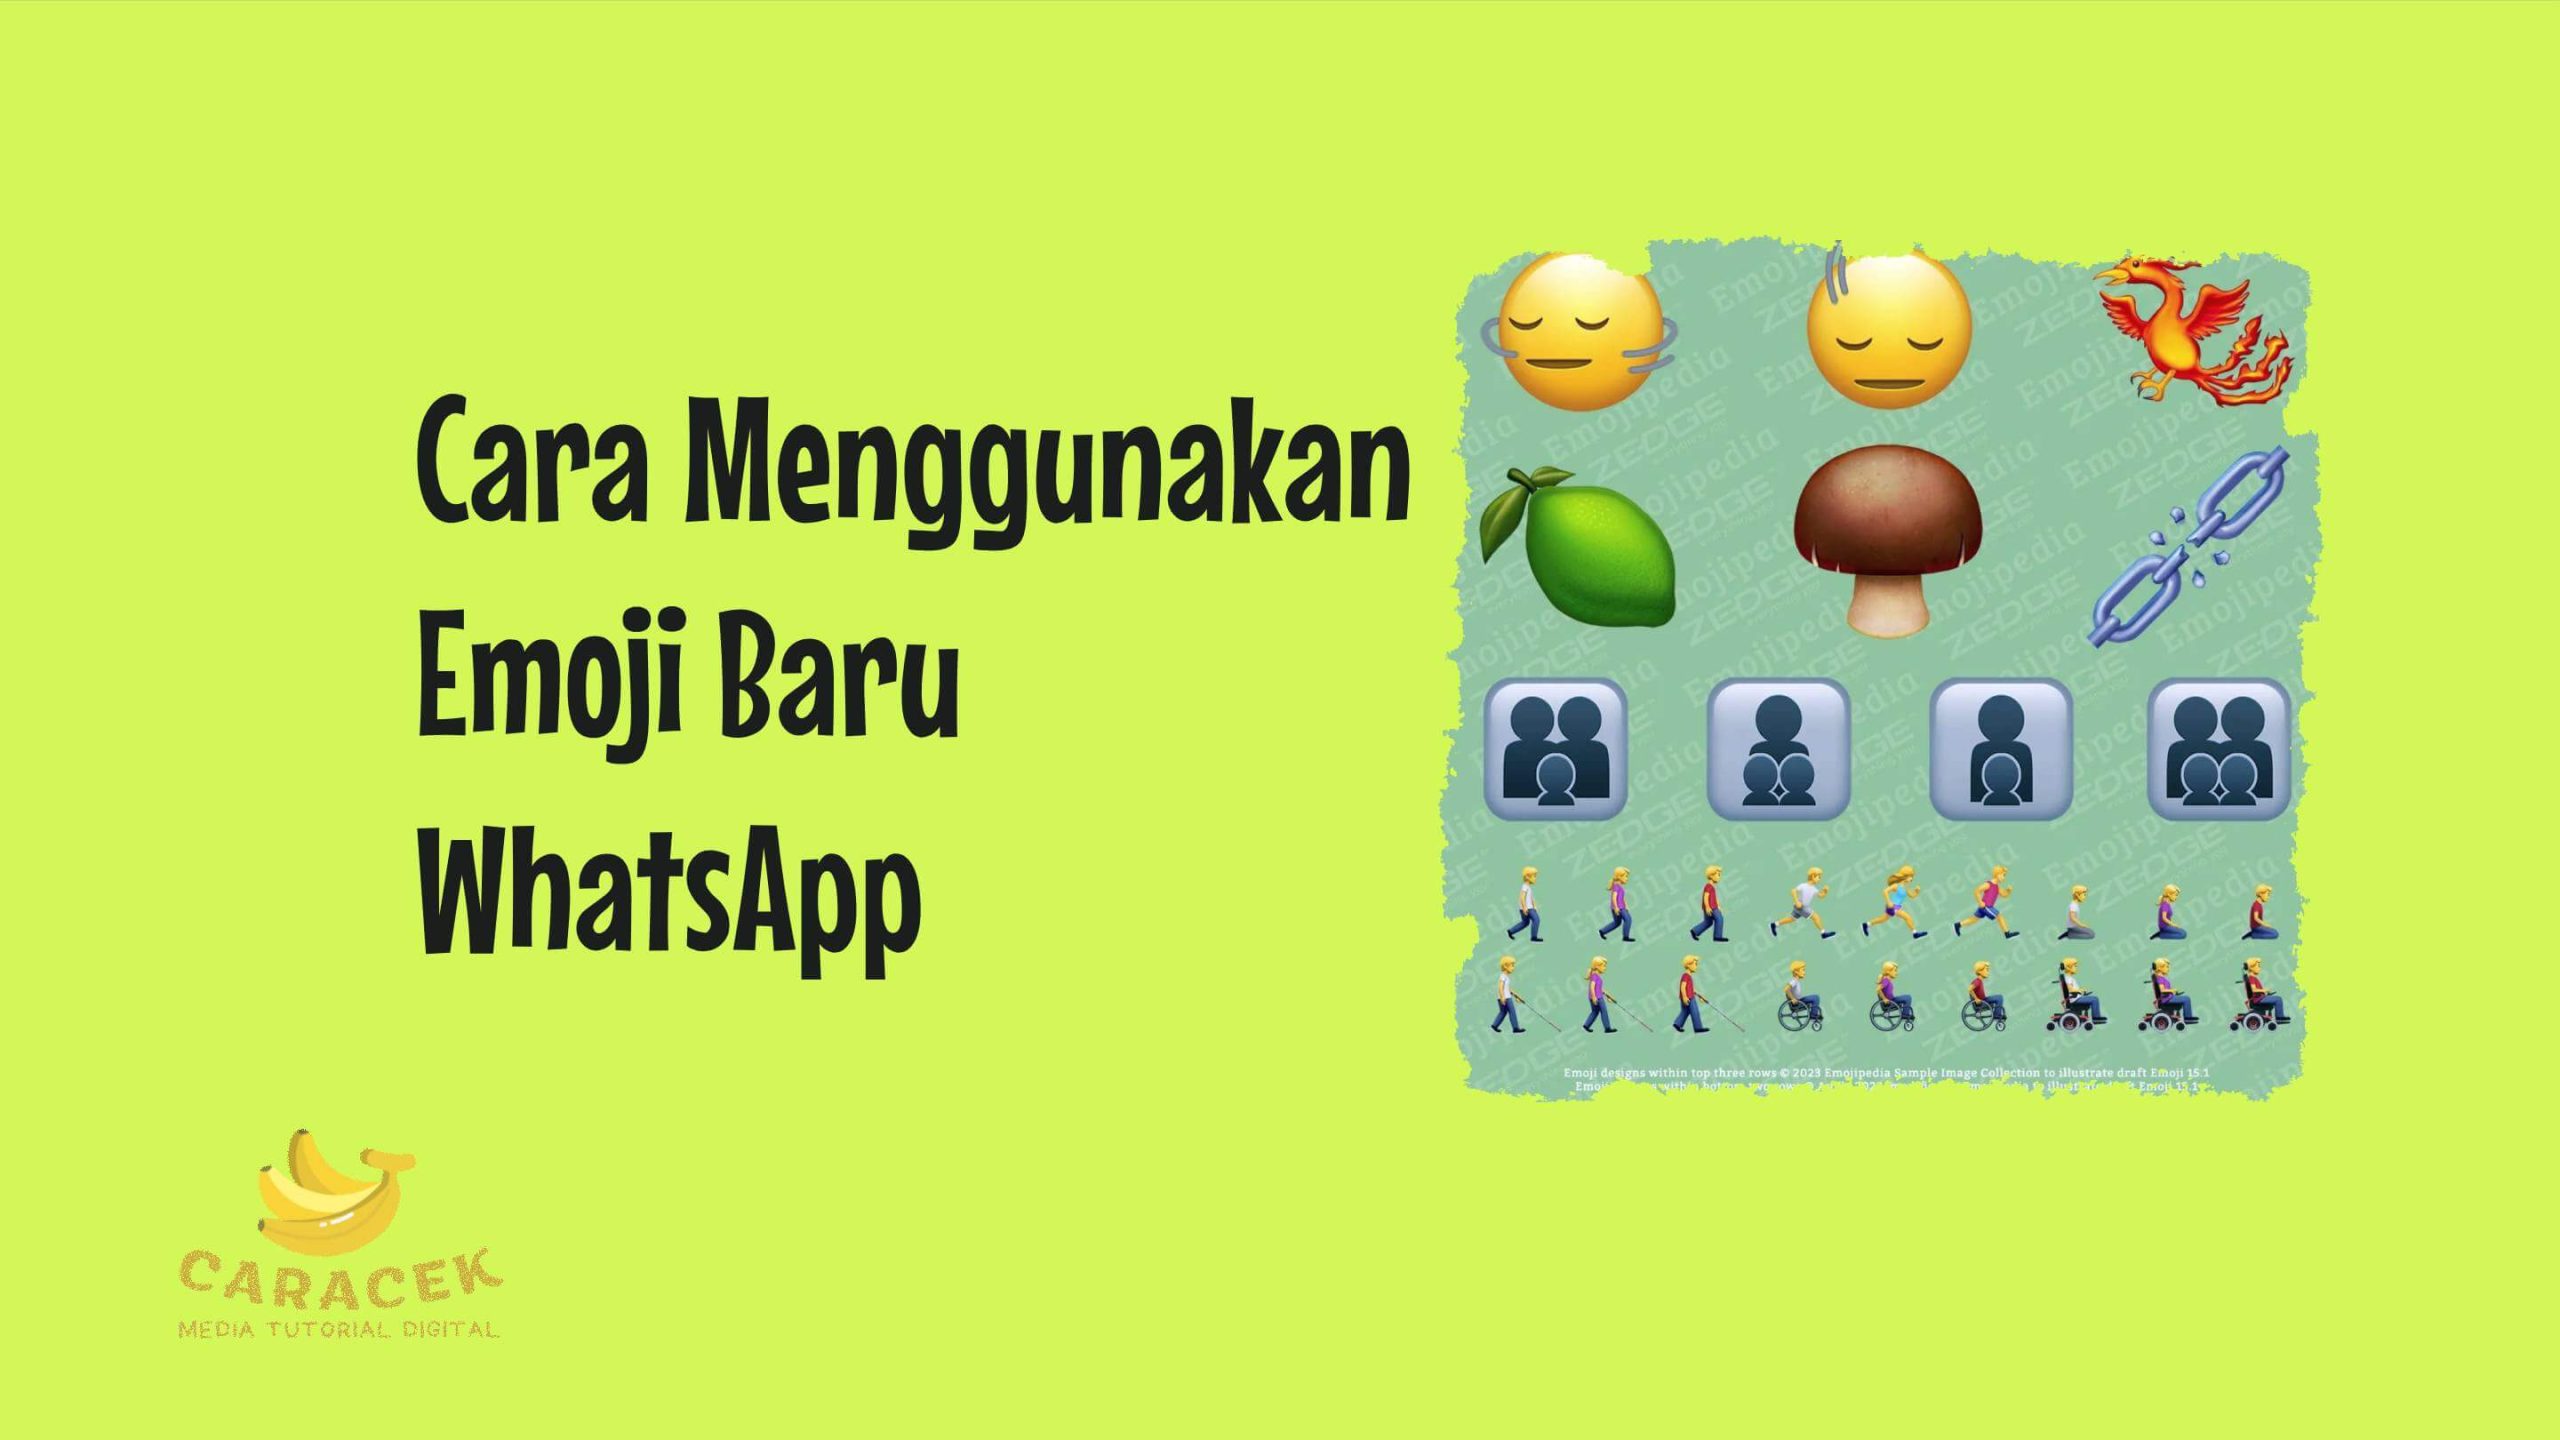 Emoji Baru WhatsApp